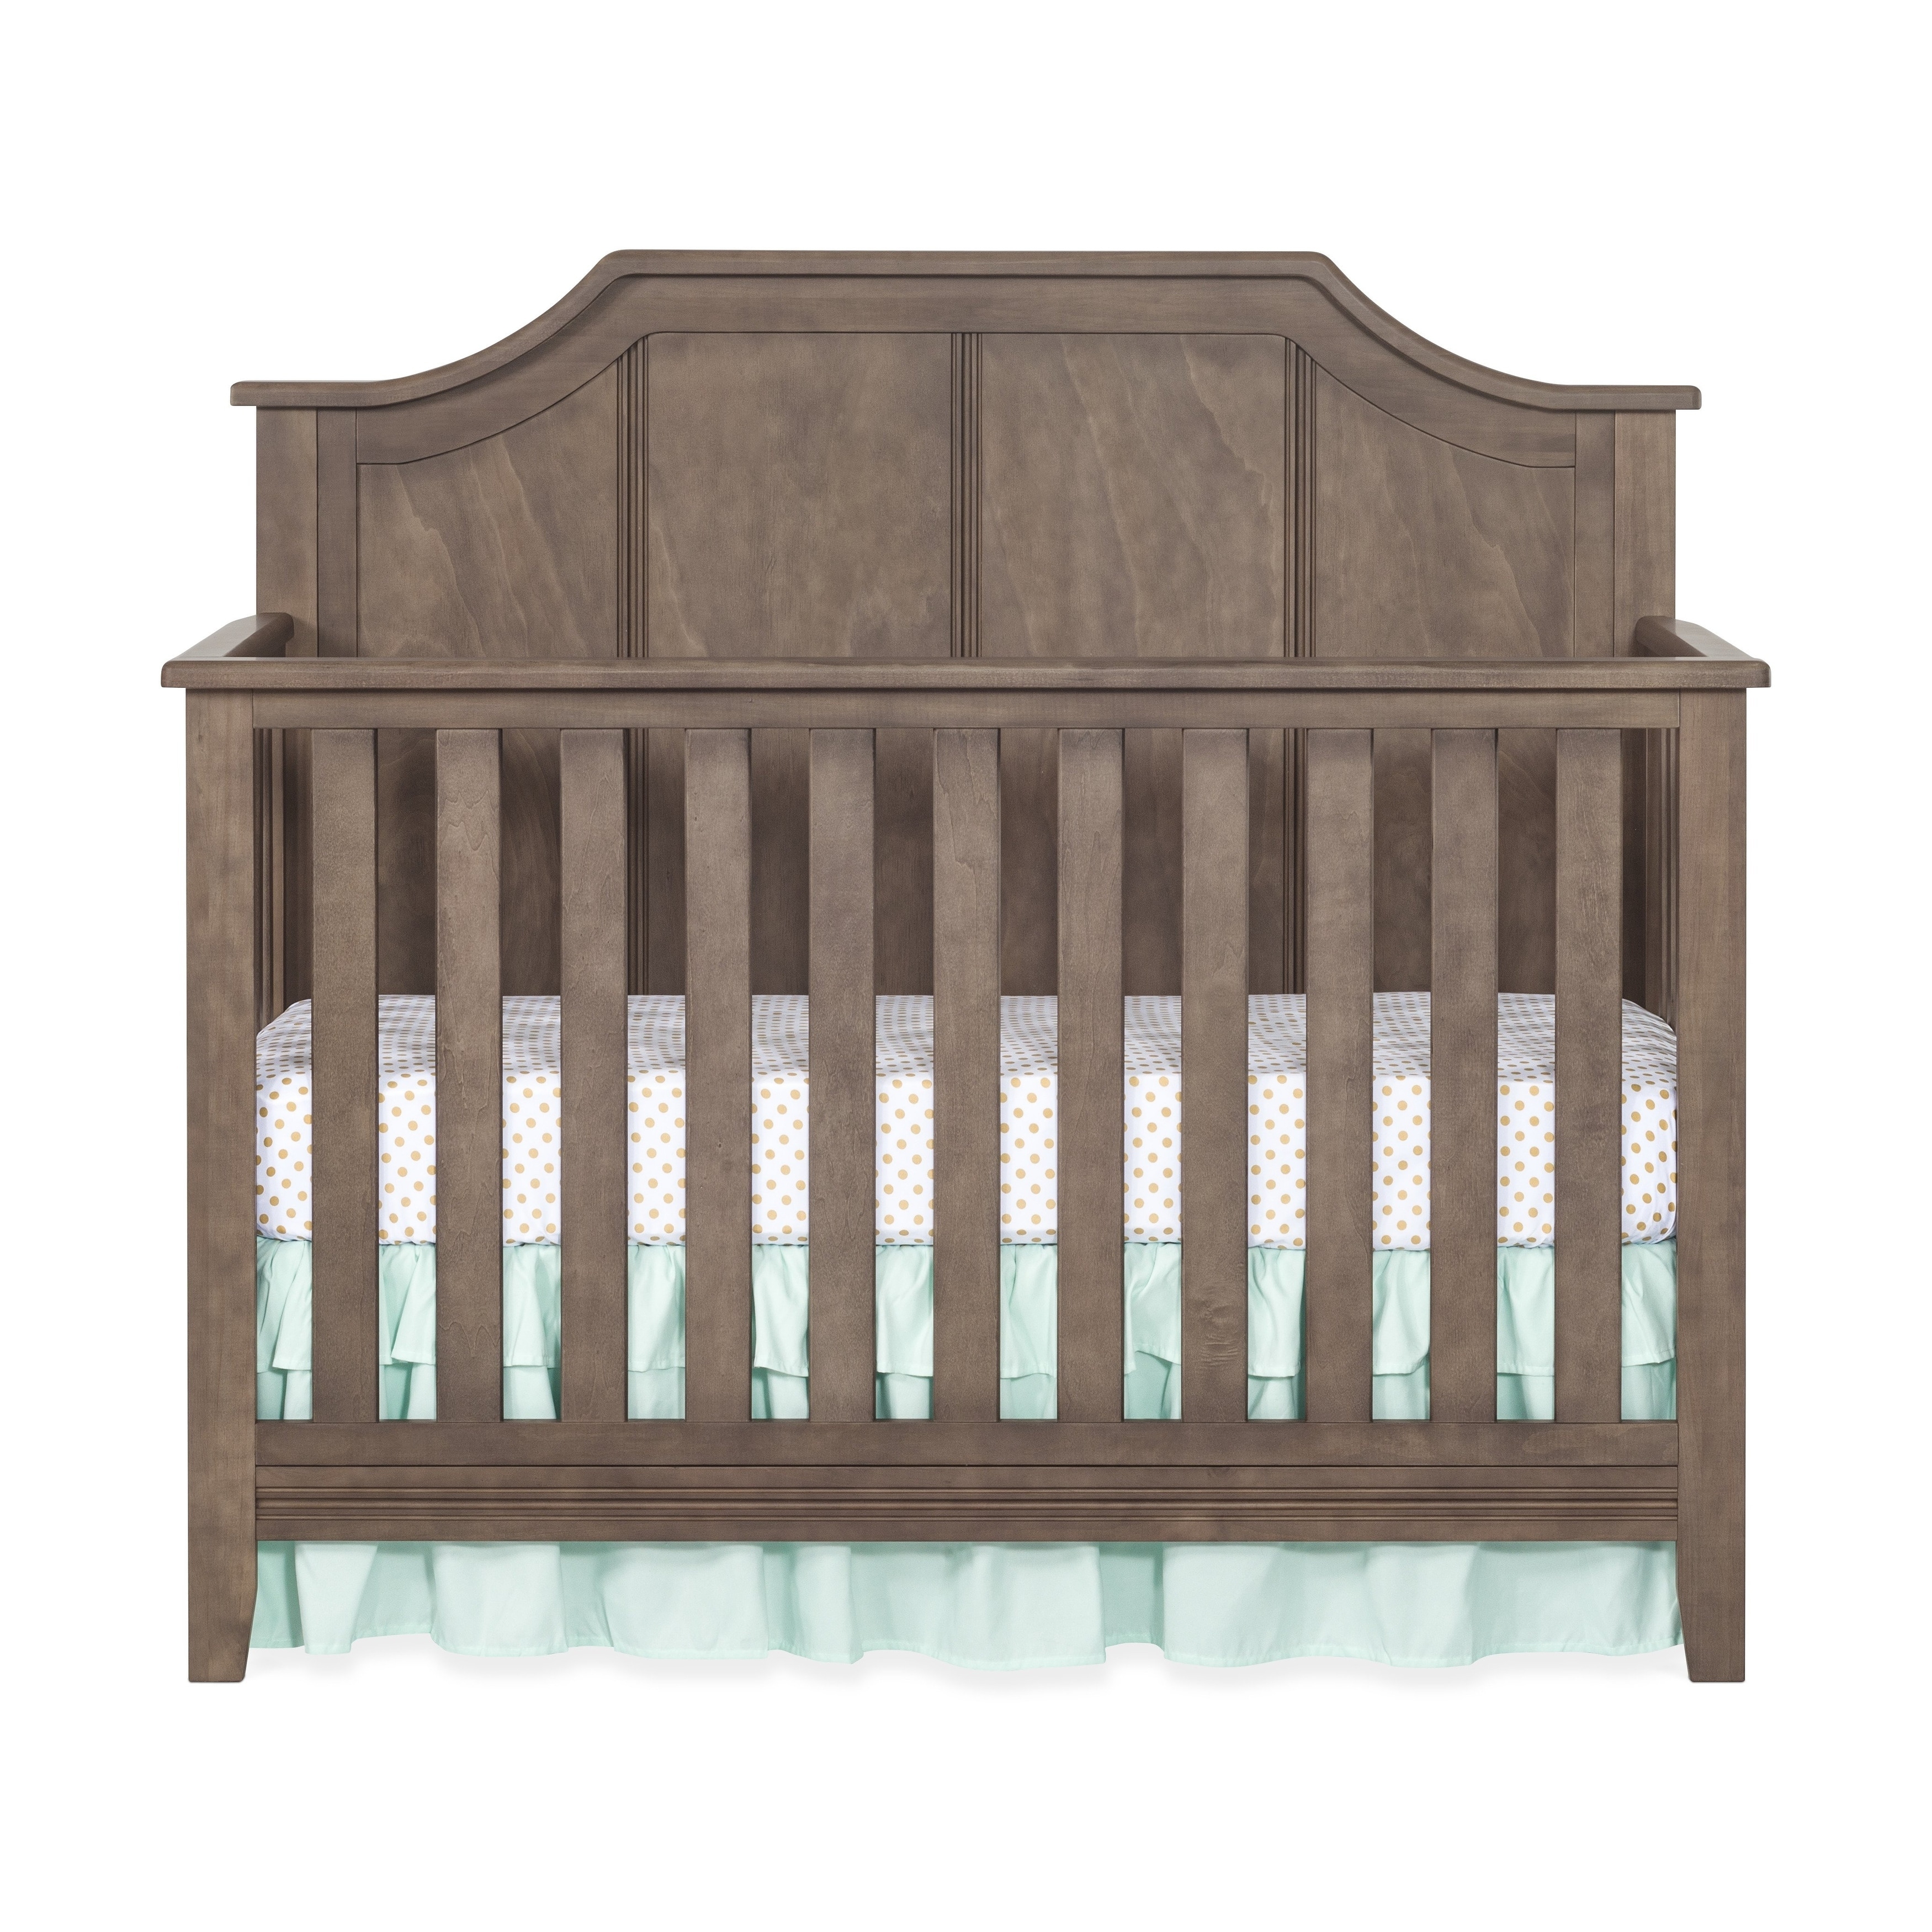 metal baby crib